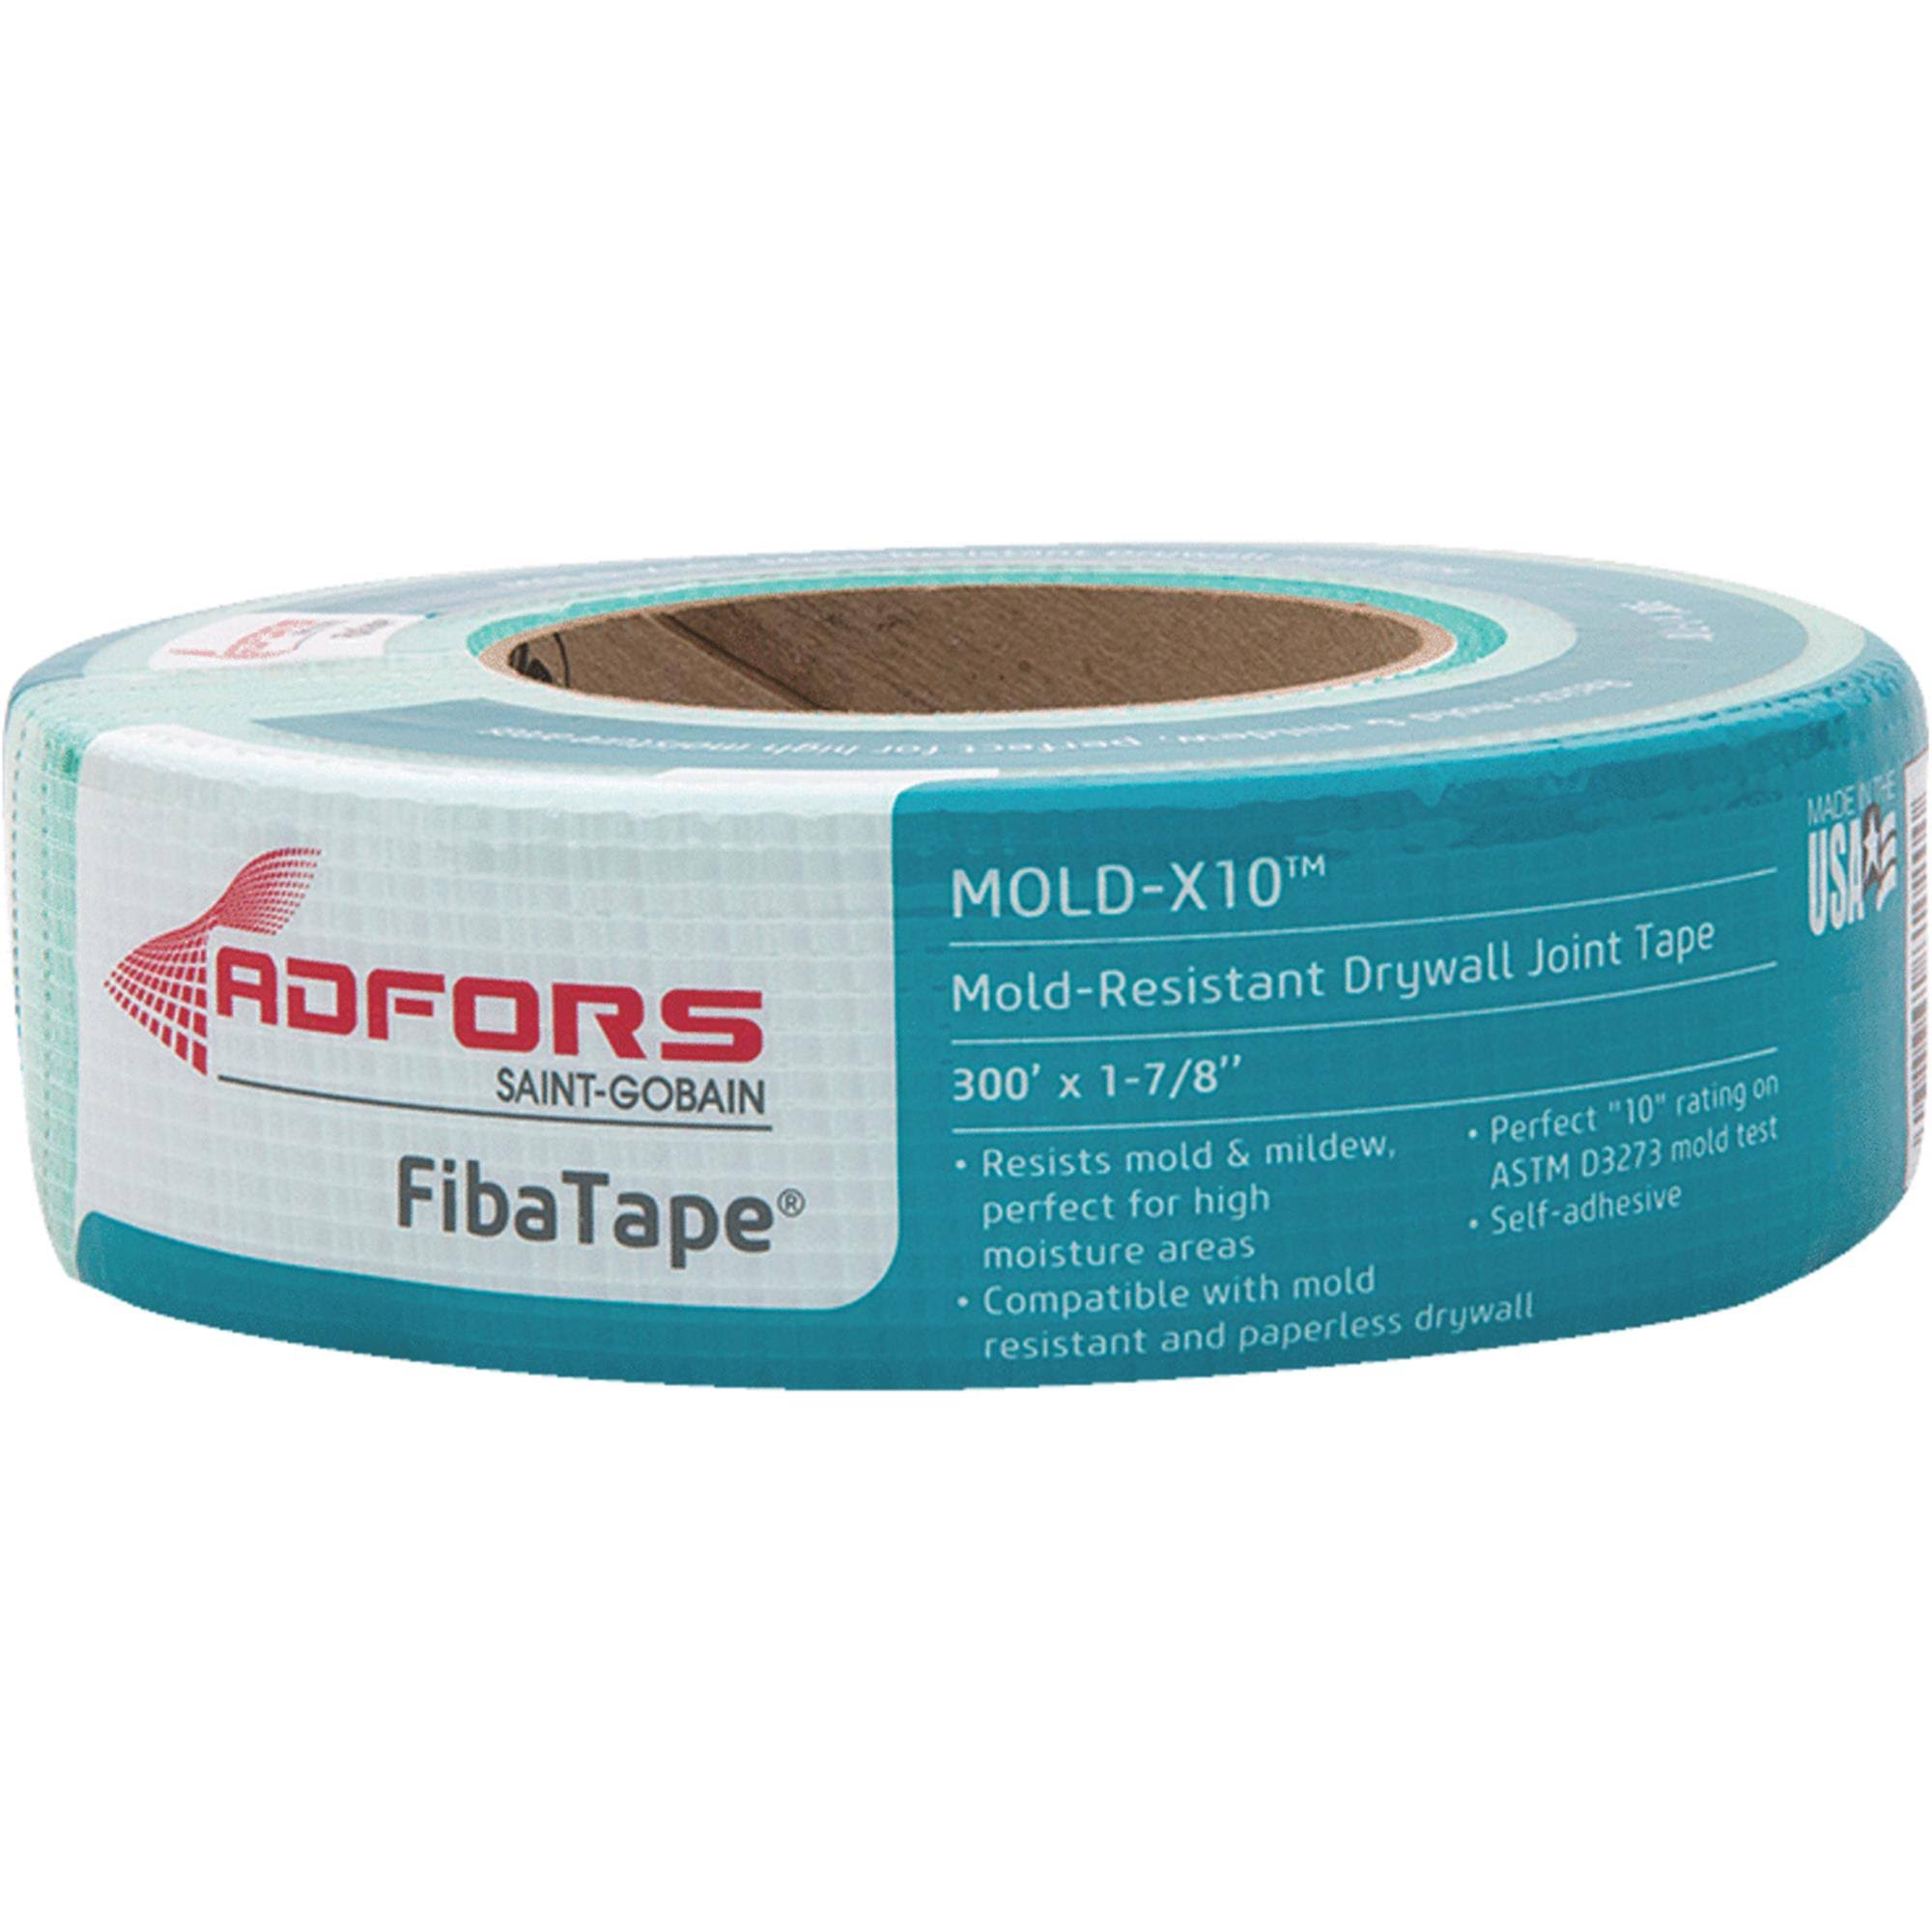 Saint Gobain FDW8664U Mold Resistant Mesh Drywall Tape - 1 7/8" x 300', Green